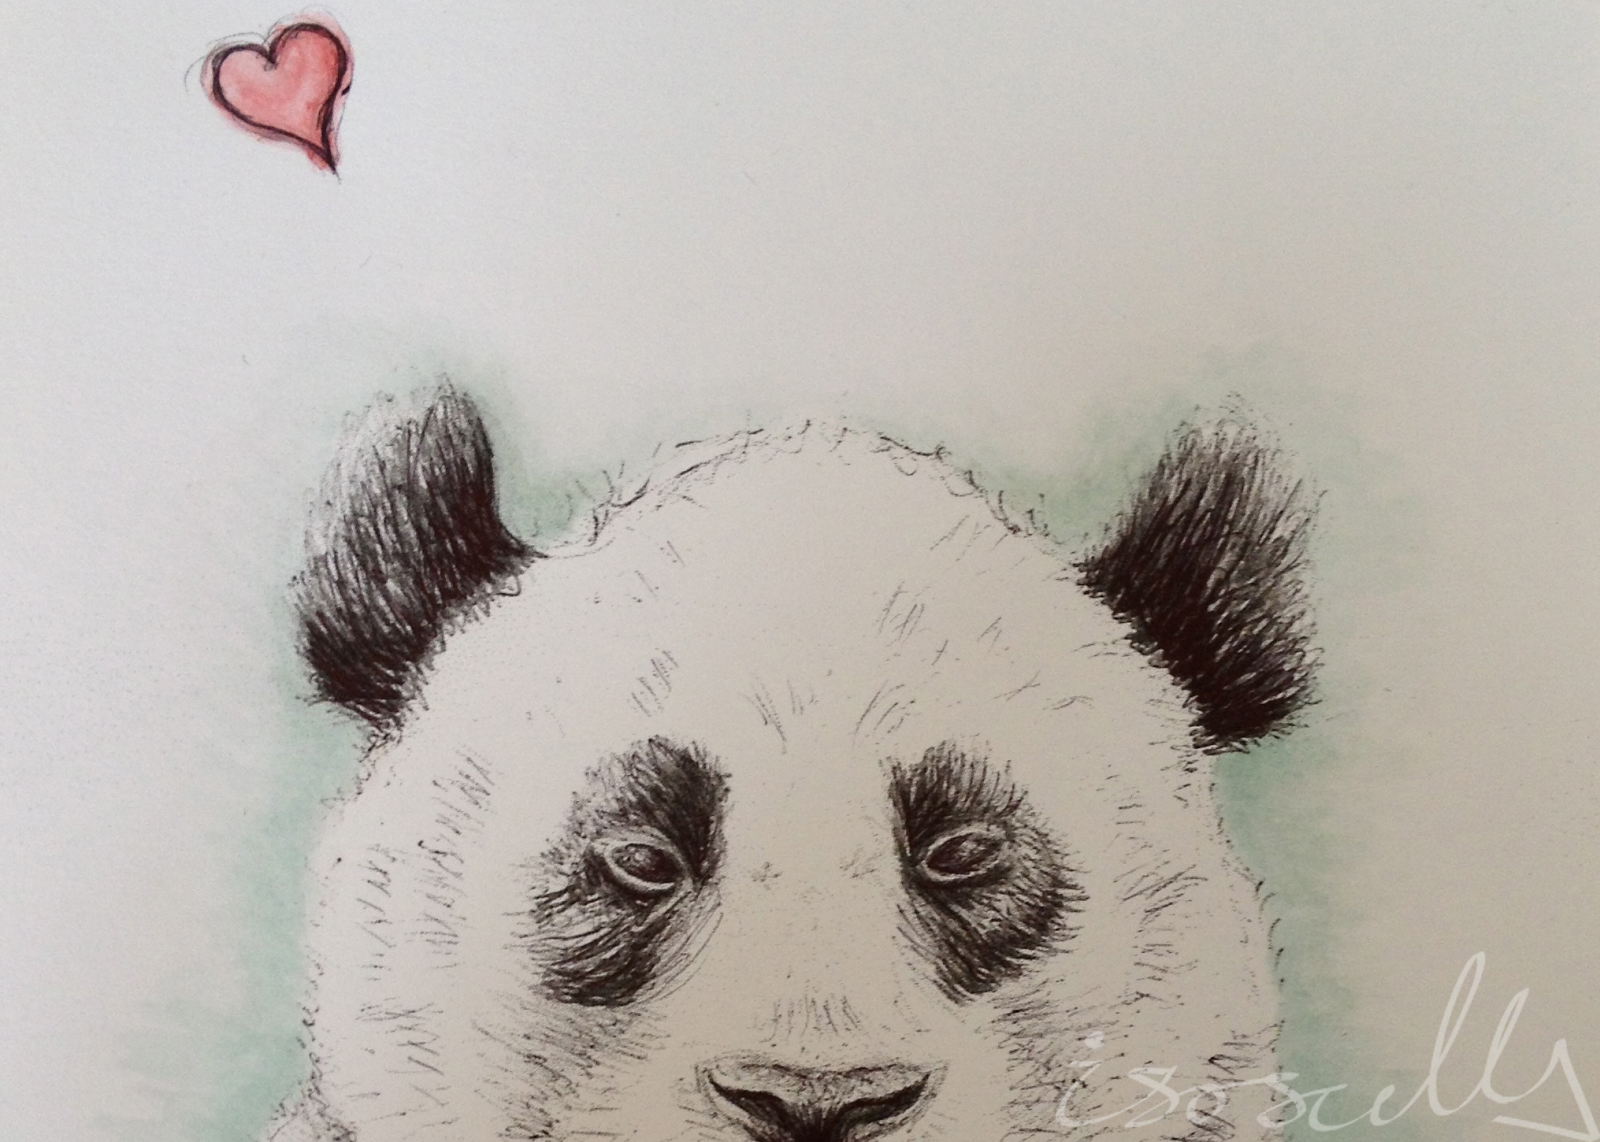 Panda biro sketch with watercolour painting